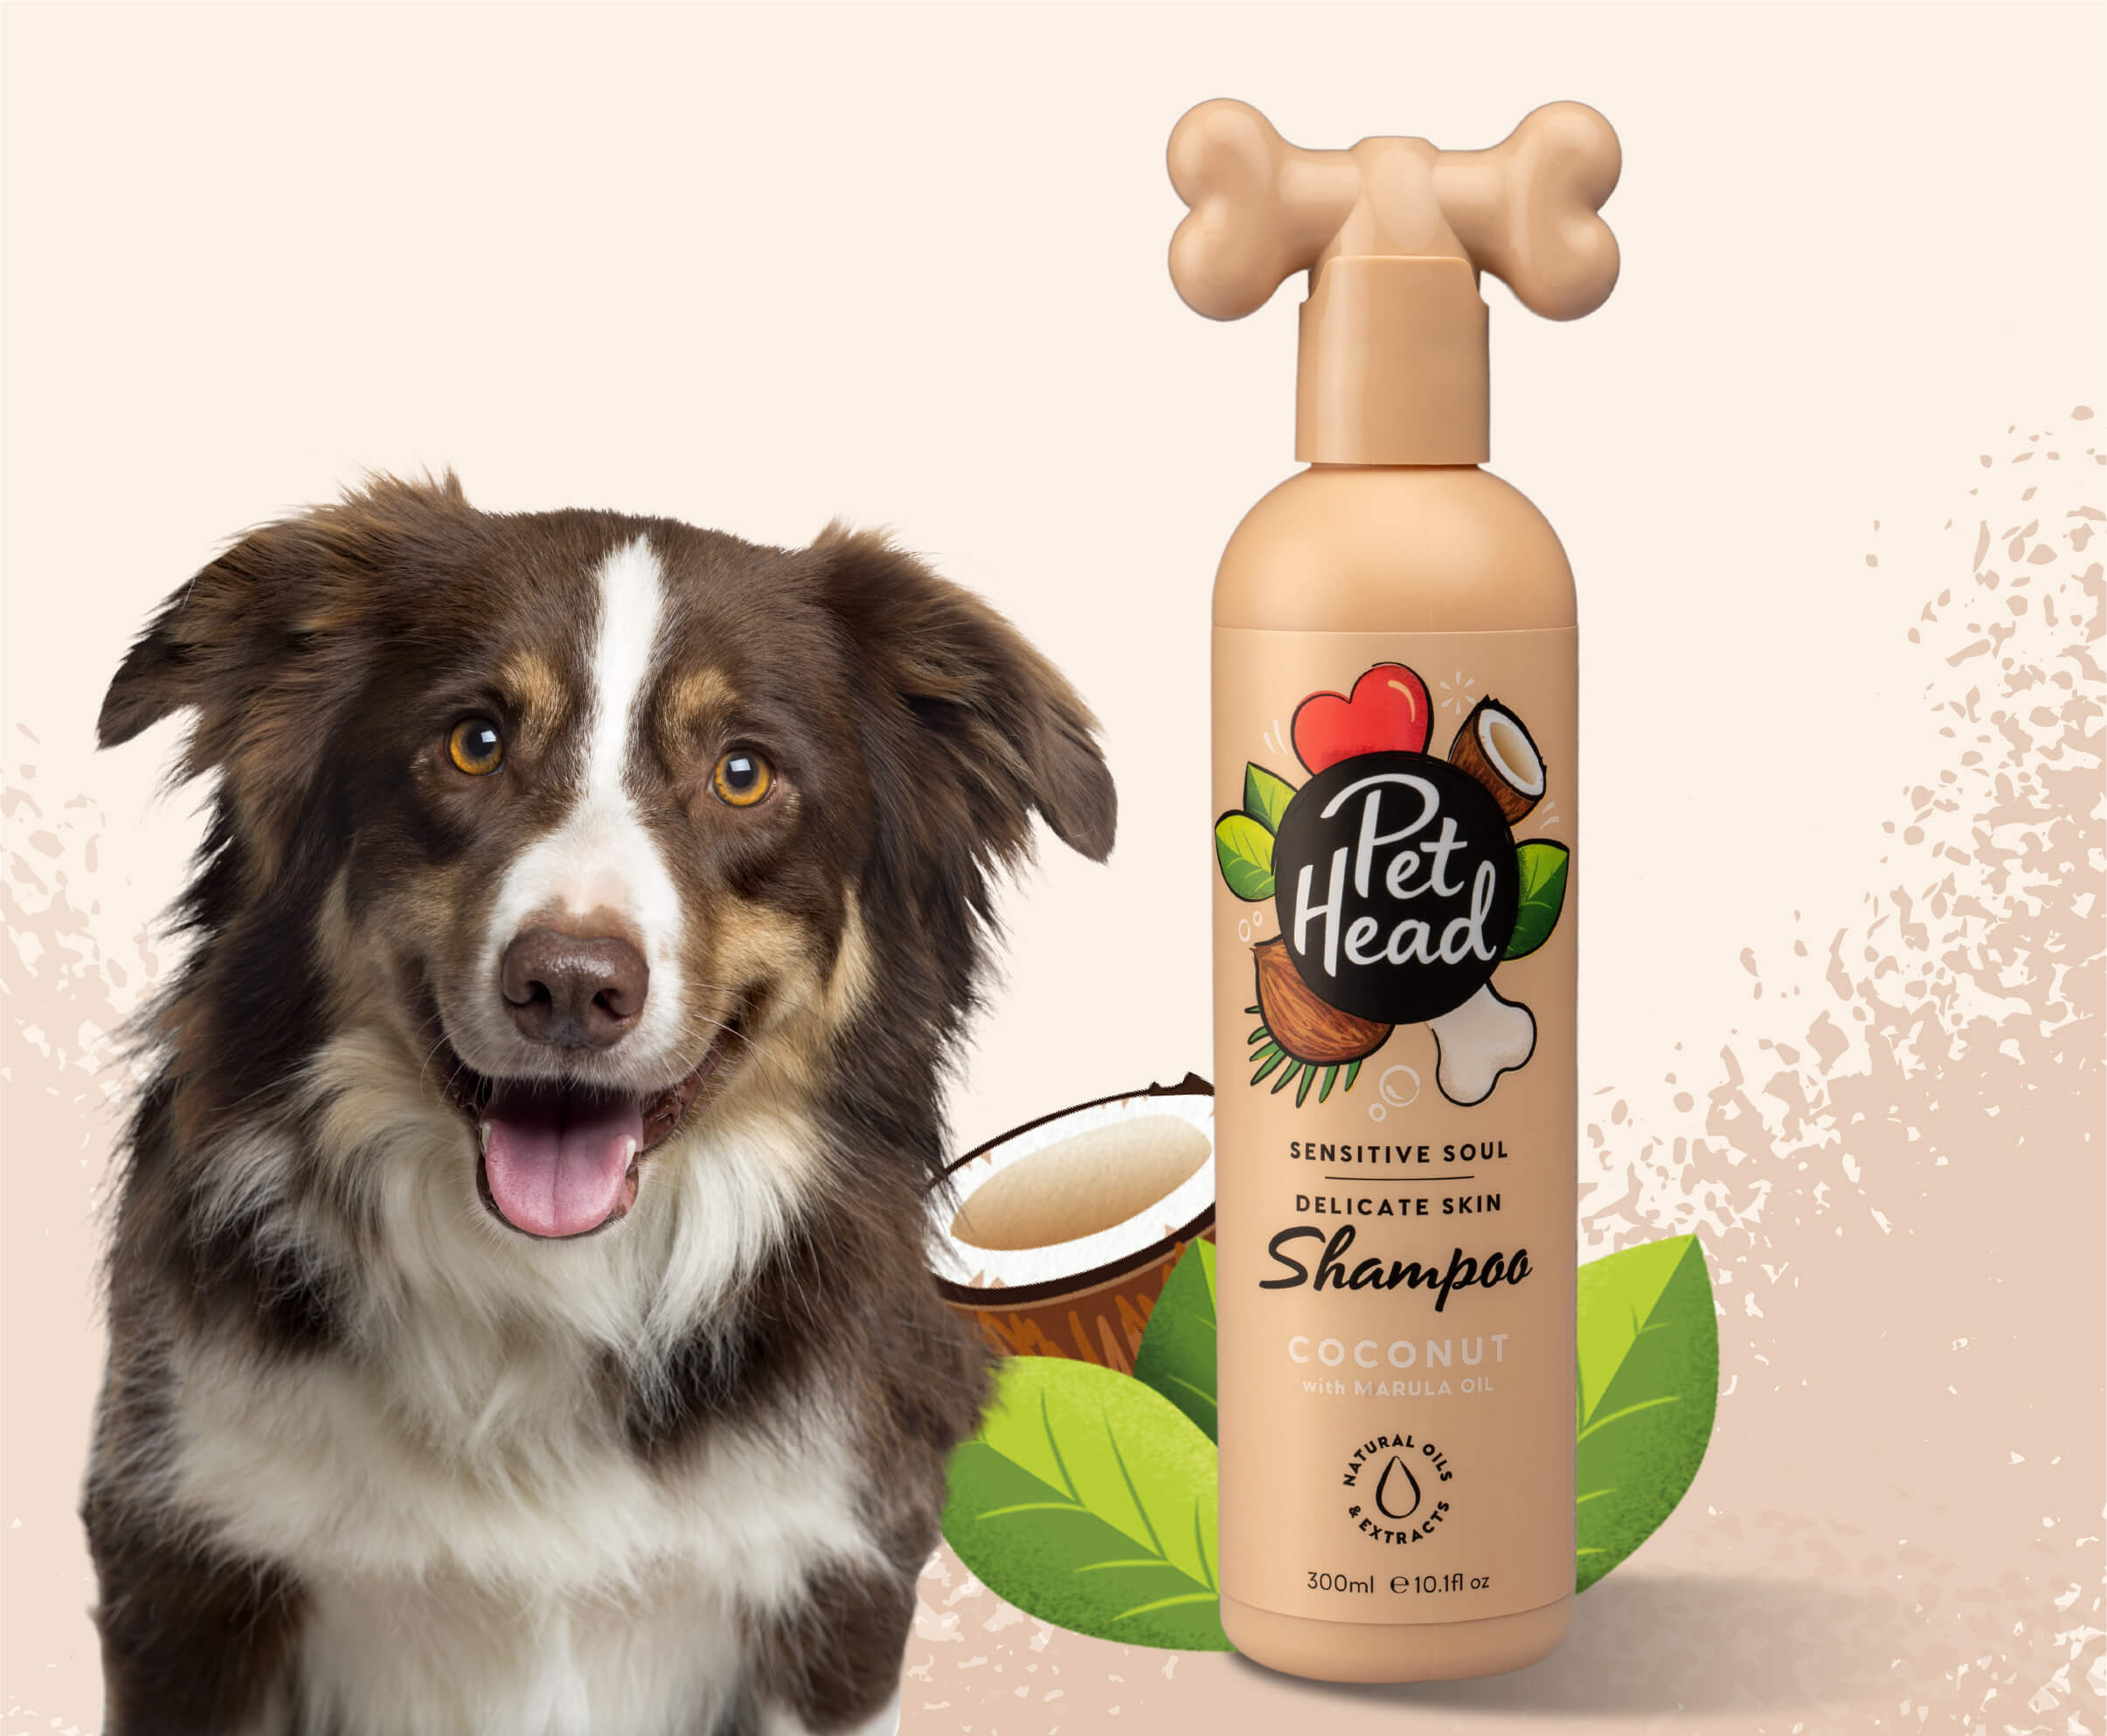 Product shot of the Pet Head Sensitive Soul Shampoo next to a happy dog